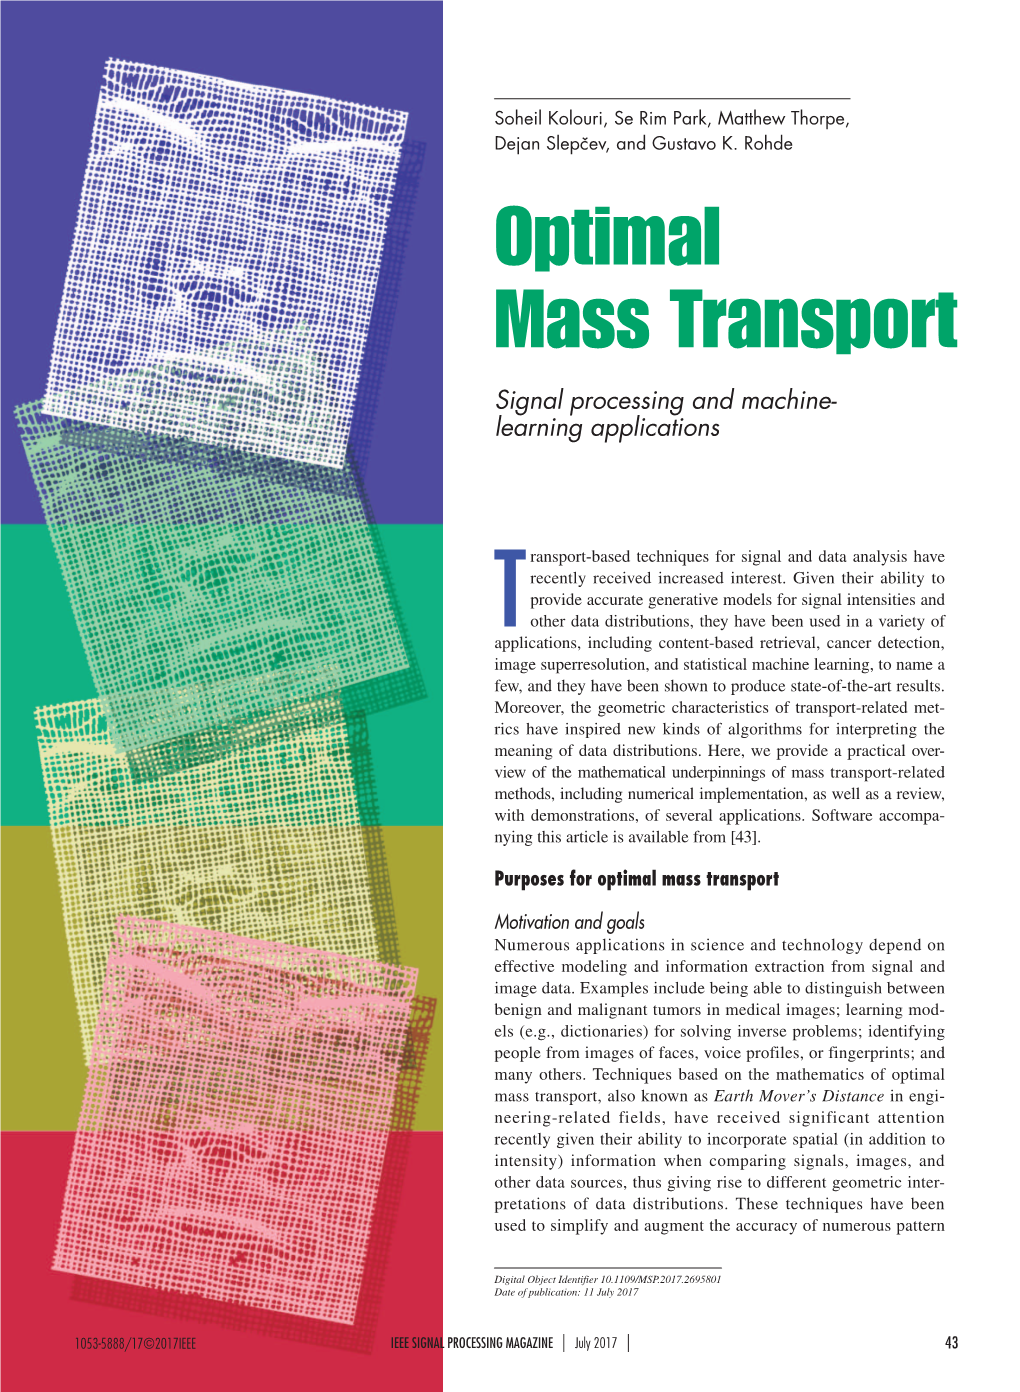 Optimal Mass Transport